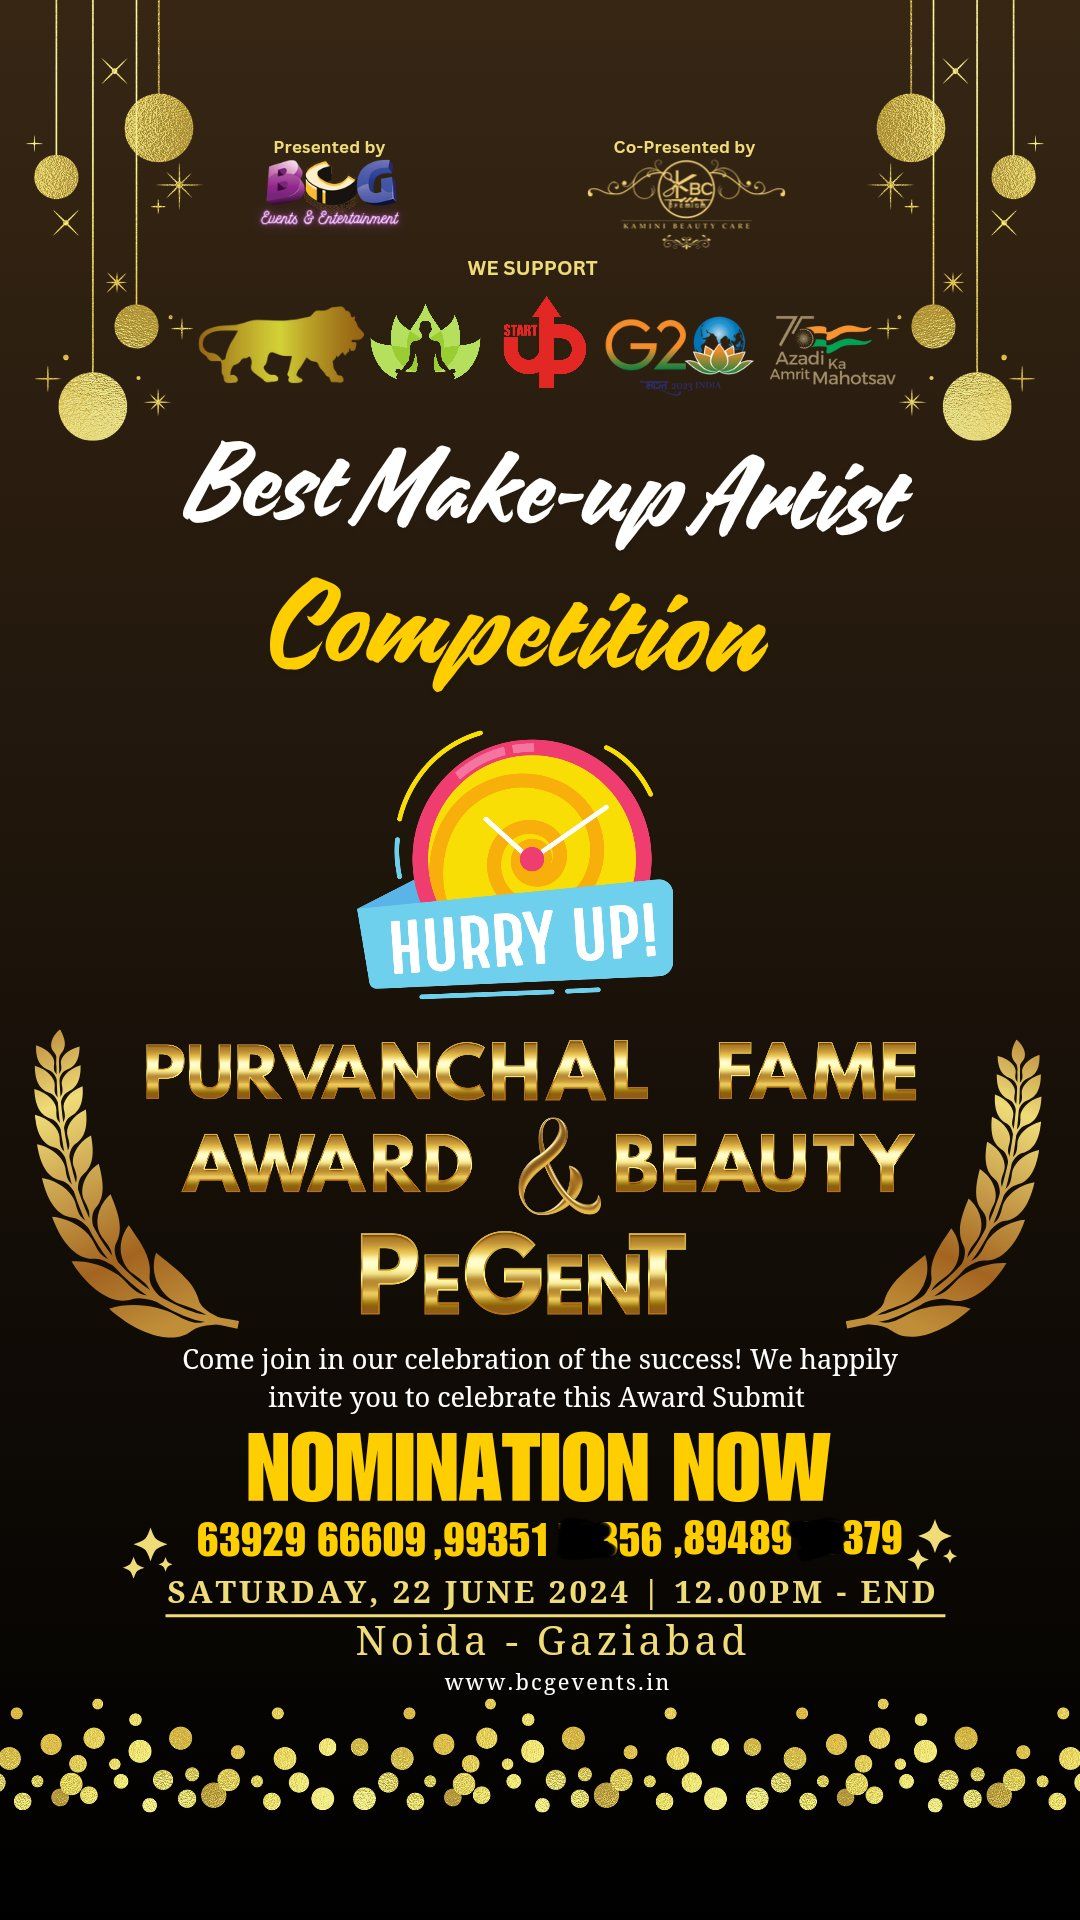 Best Make-up Artist Competition